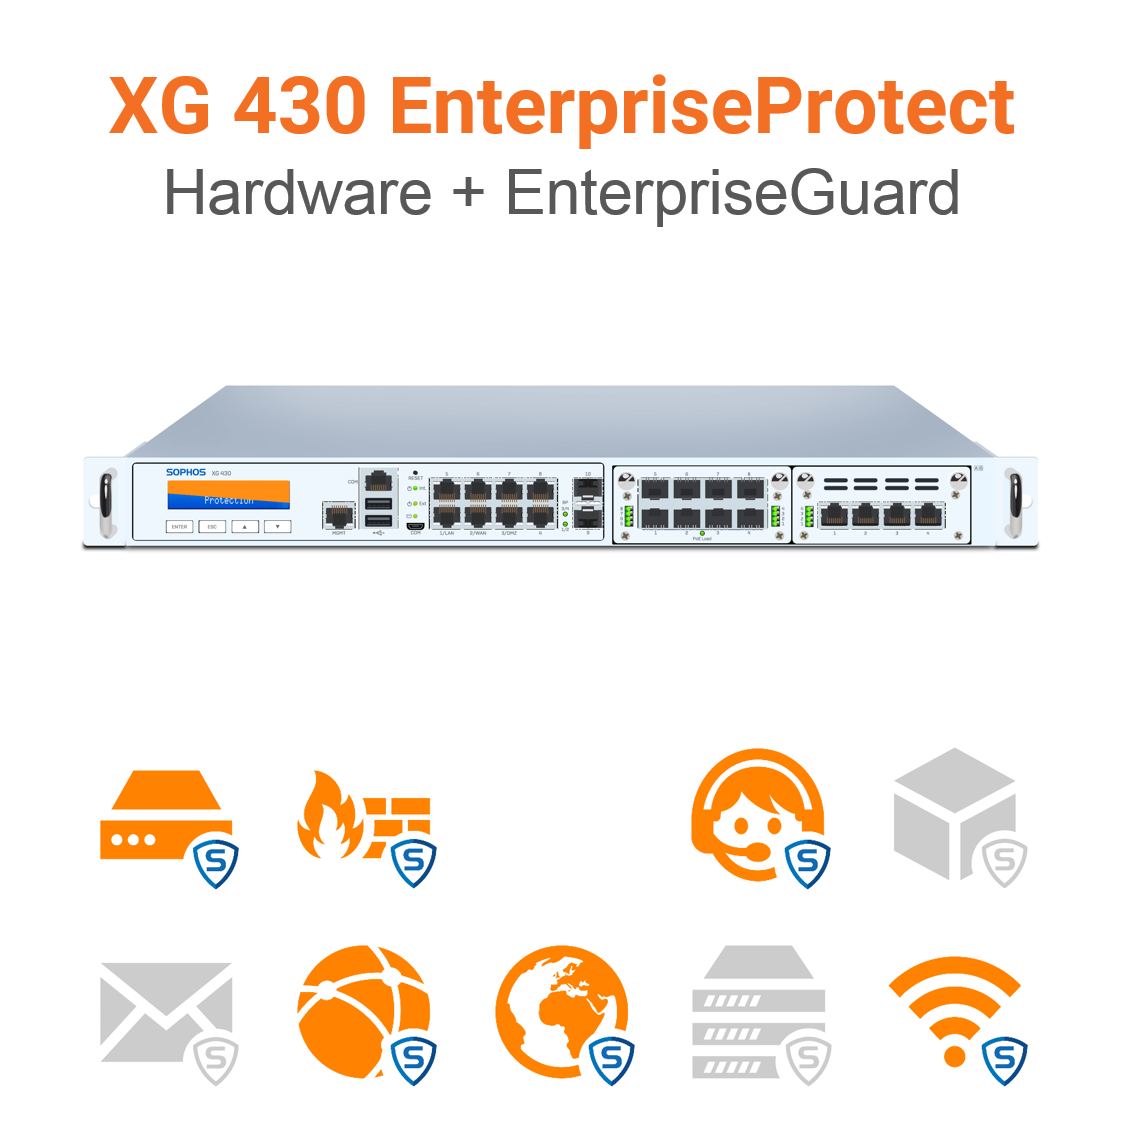 Sophos XG 430 EnterpriseProtect Bundle (Hardware + Lizenz)